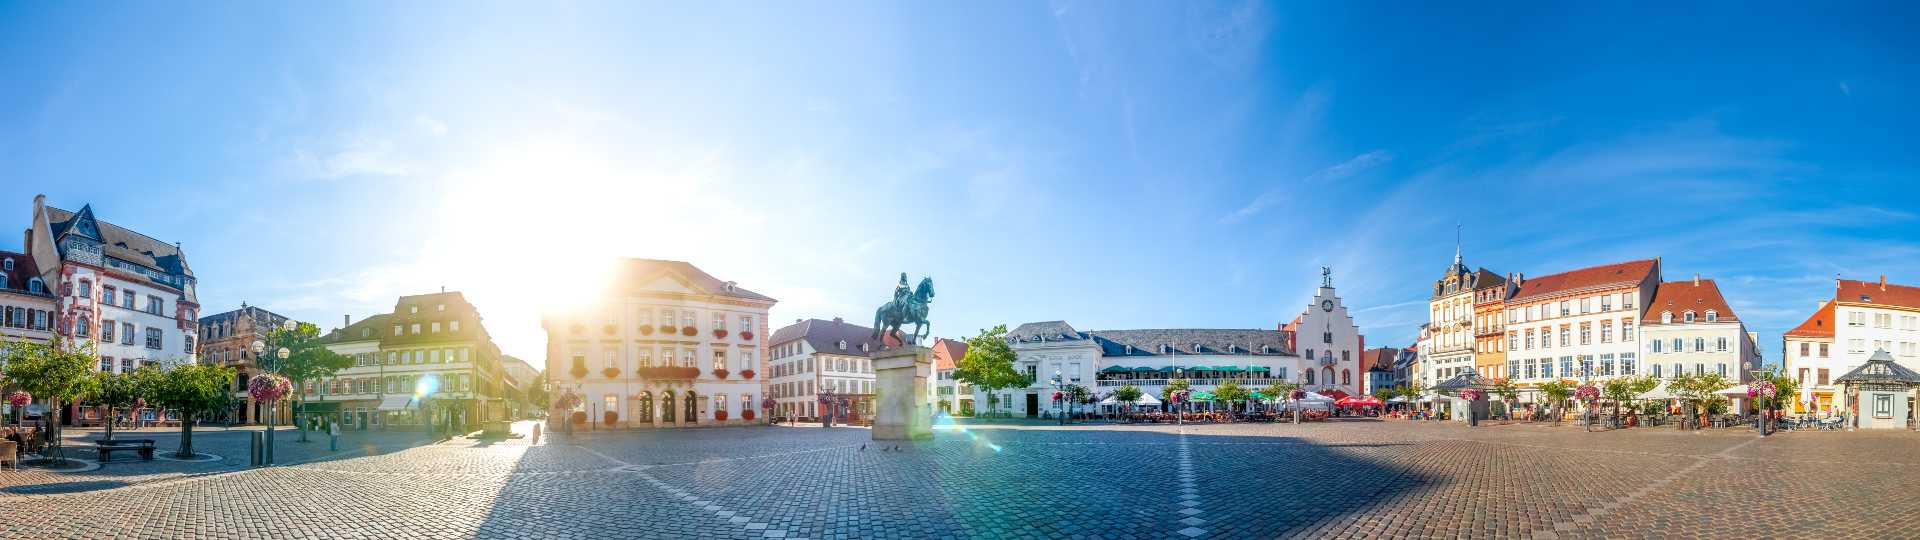 Rathausplatz in Landau